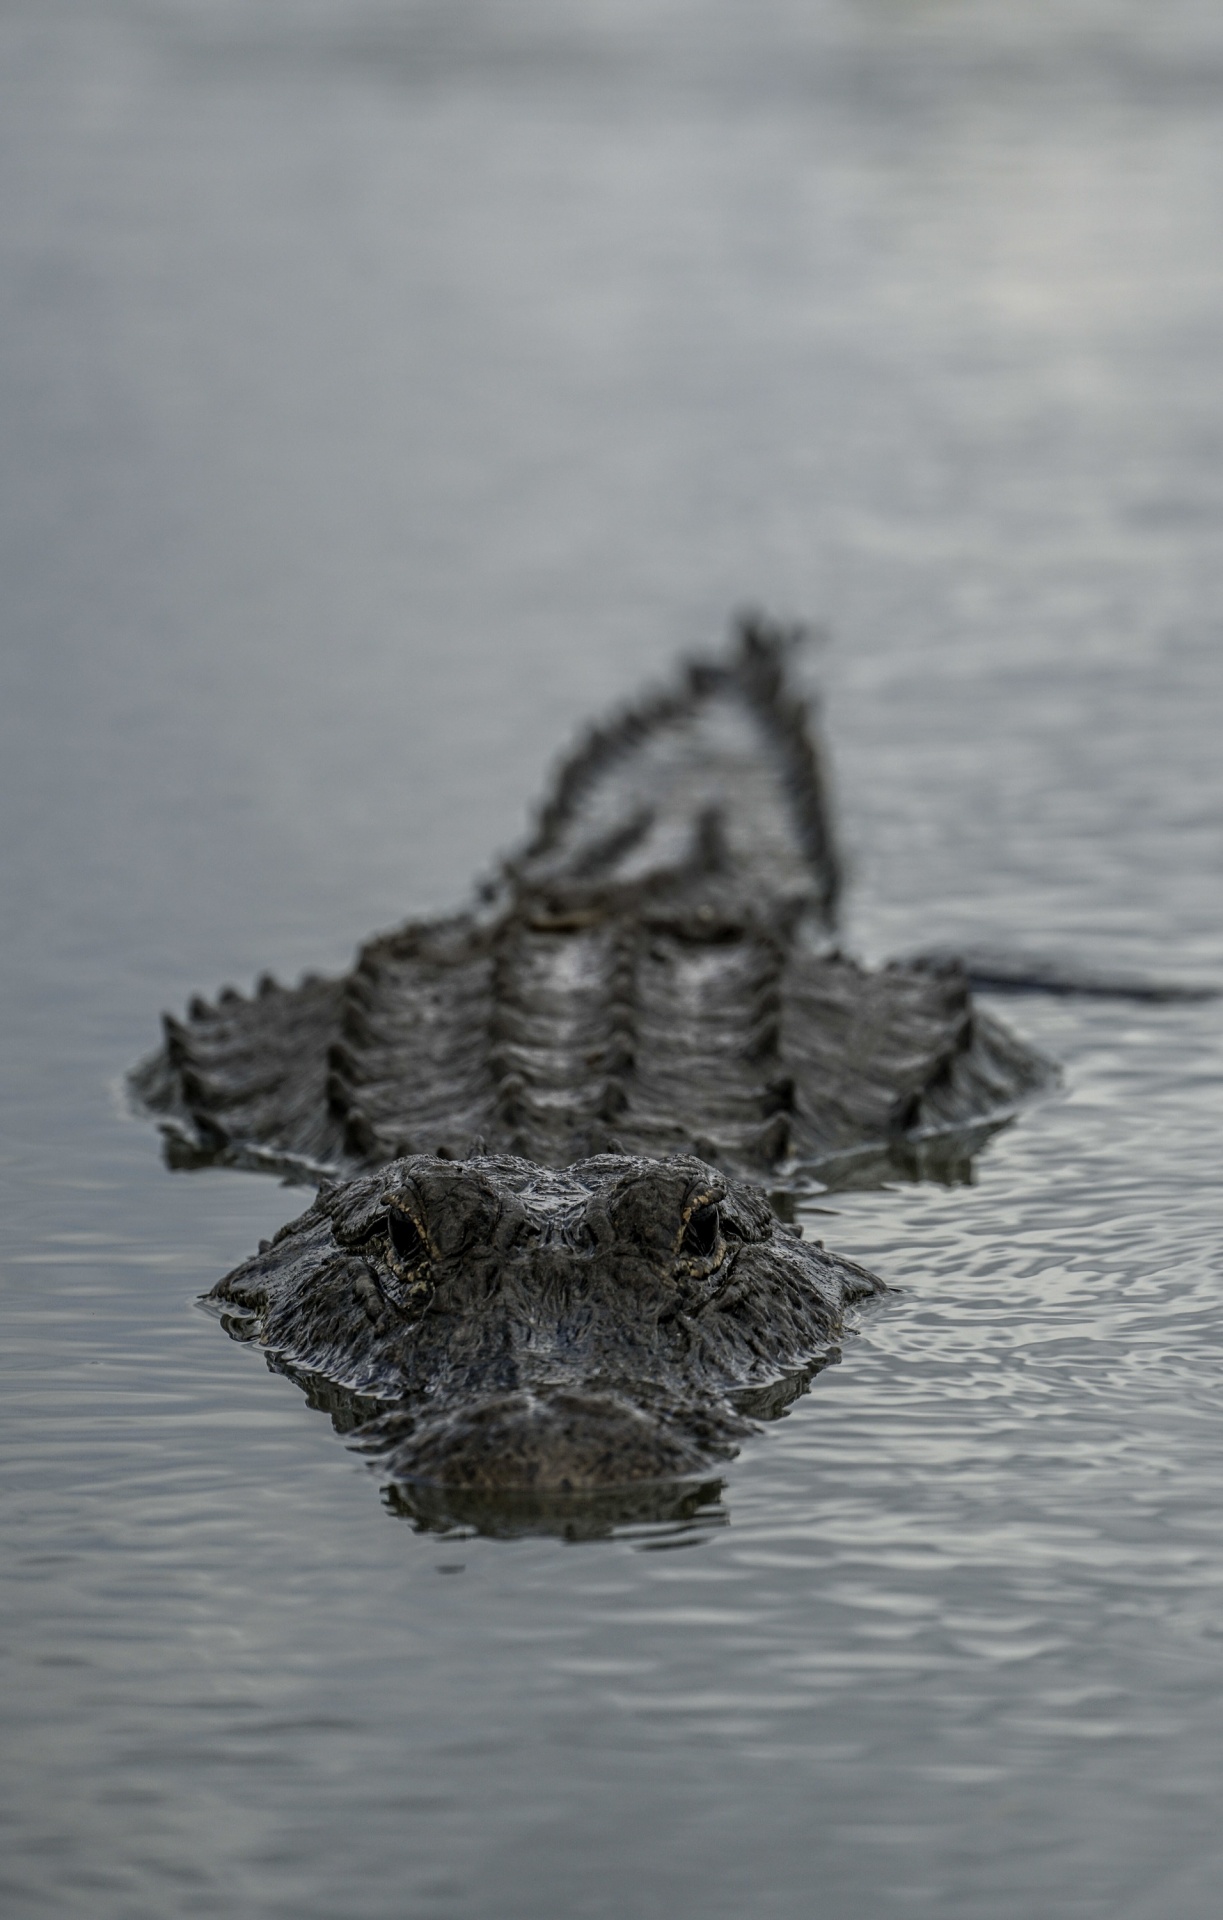 Portrait of an Alligator